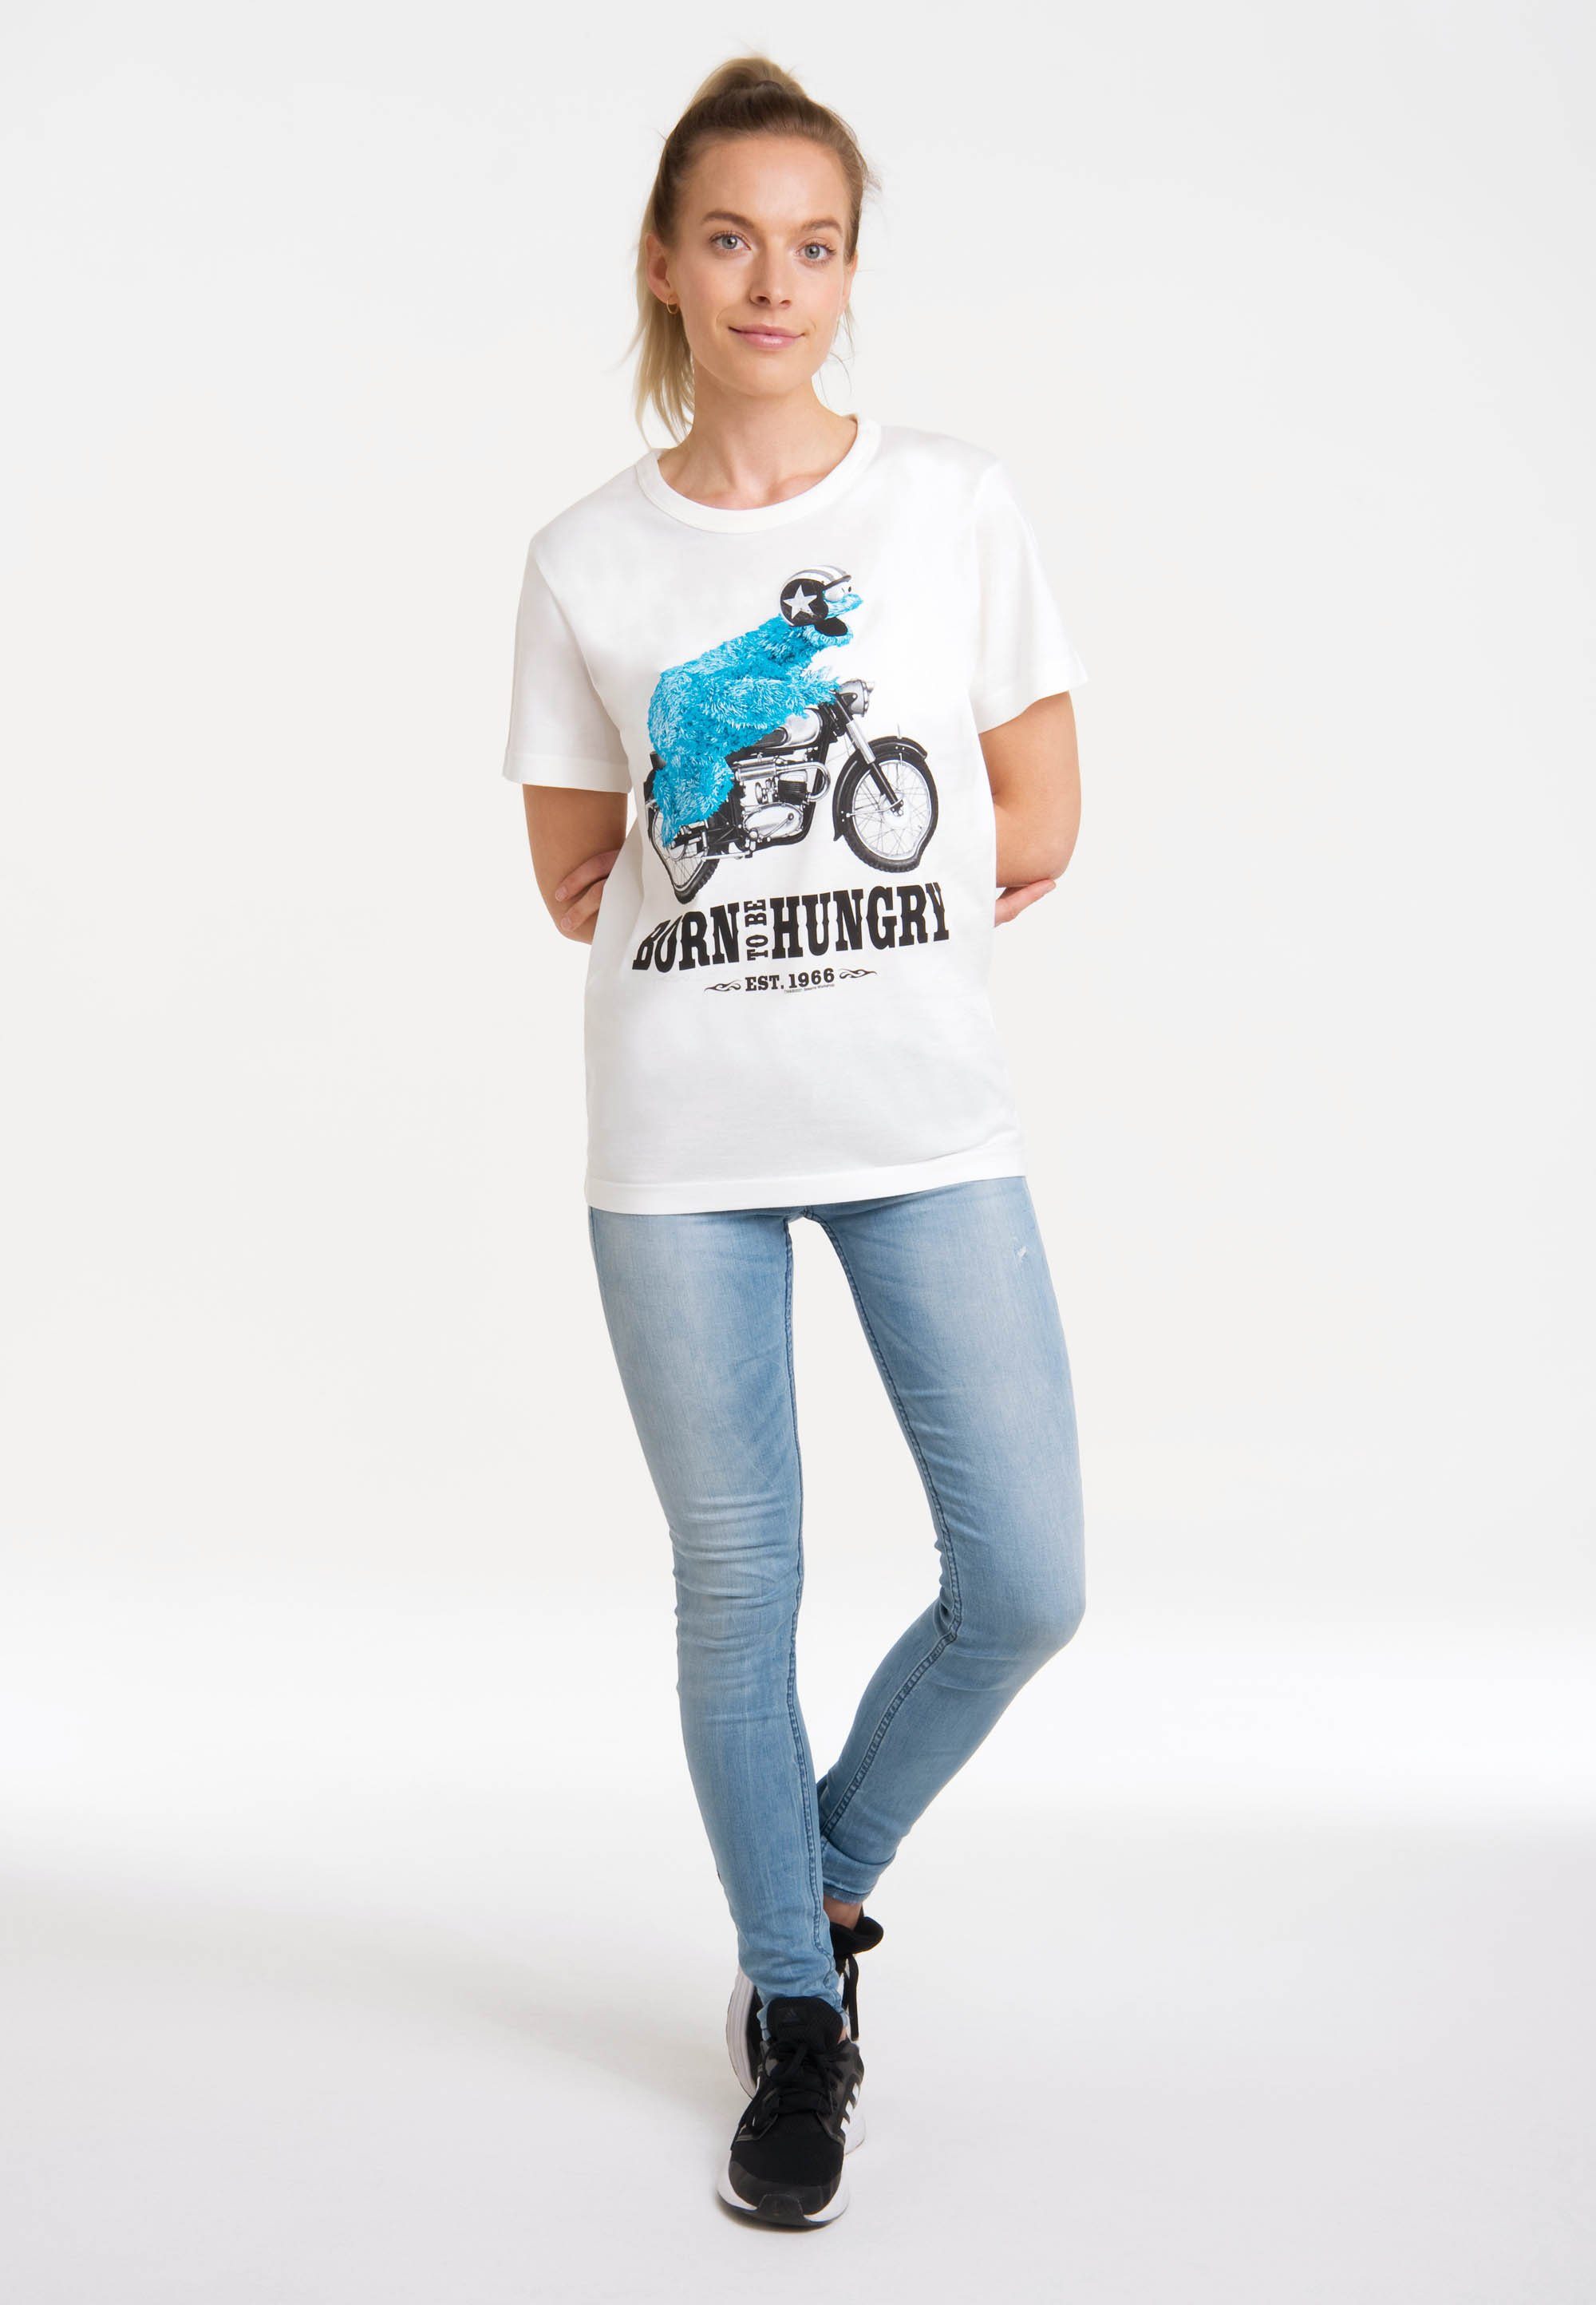 Sesamstrasse LOGOSHIRT mit lizenziertem der Krümelmonster-Motiv T-Shirt Motorrad auf Front Witziges Print, Krümelmonster - Highlight als